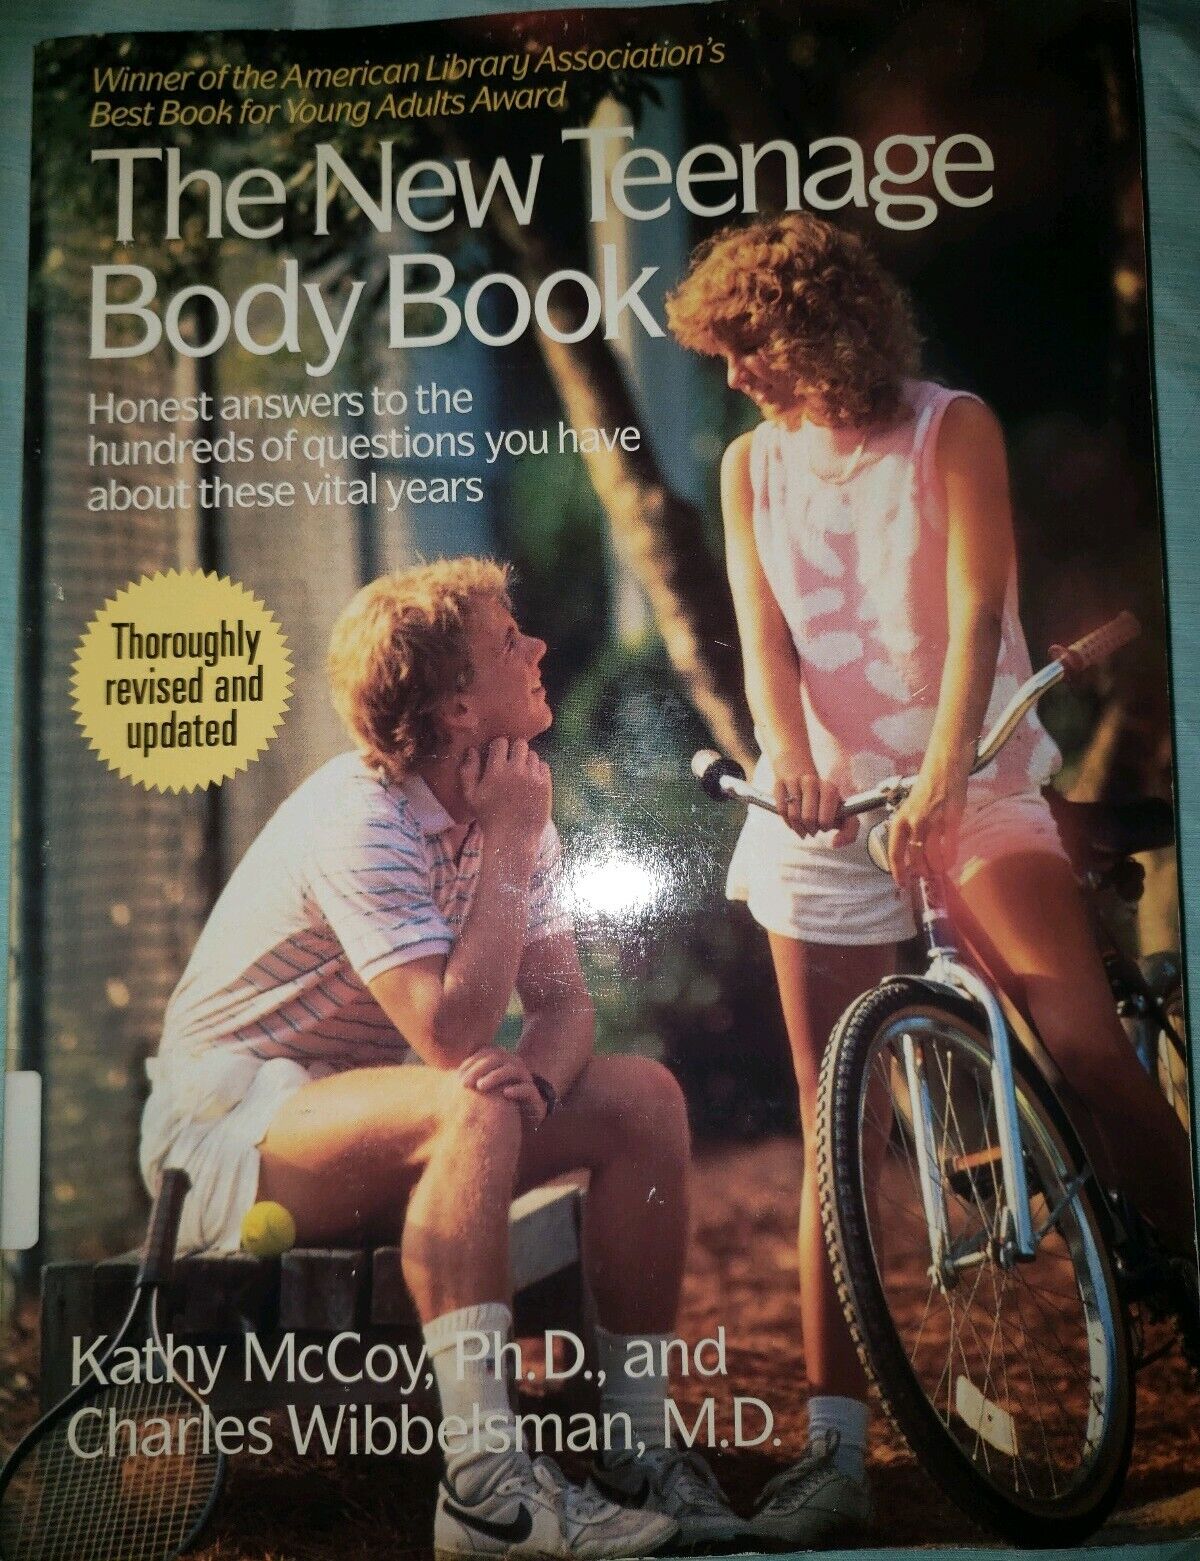 The New Teenage Body Book Kathy McCoy & Charles Wibbelsman Winner of Best Book